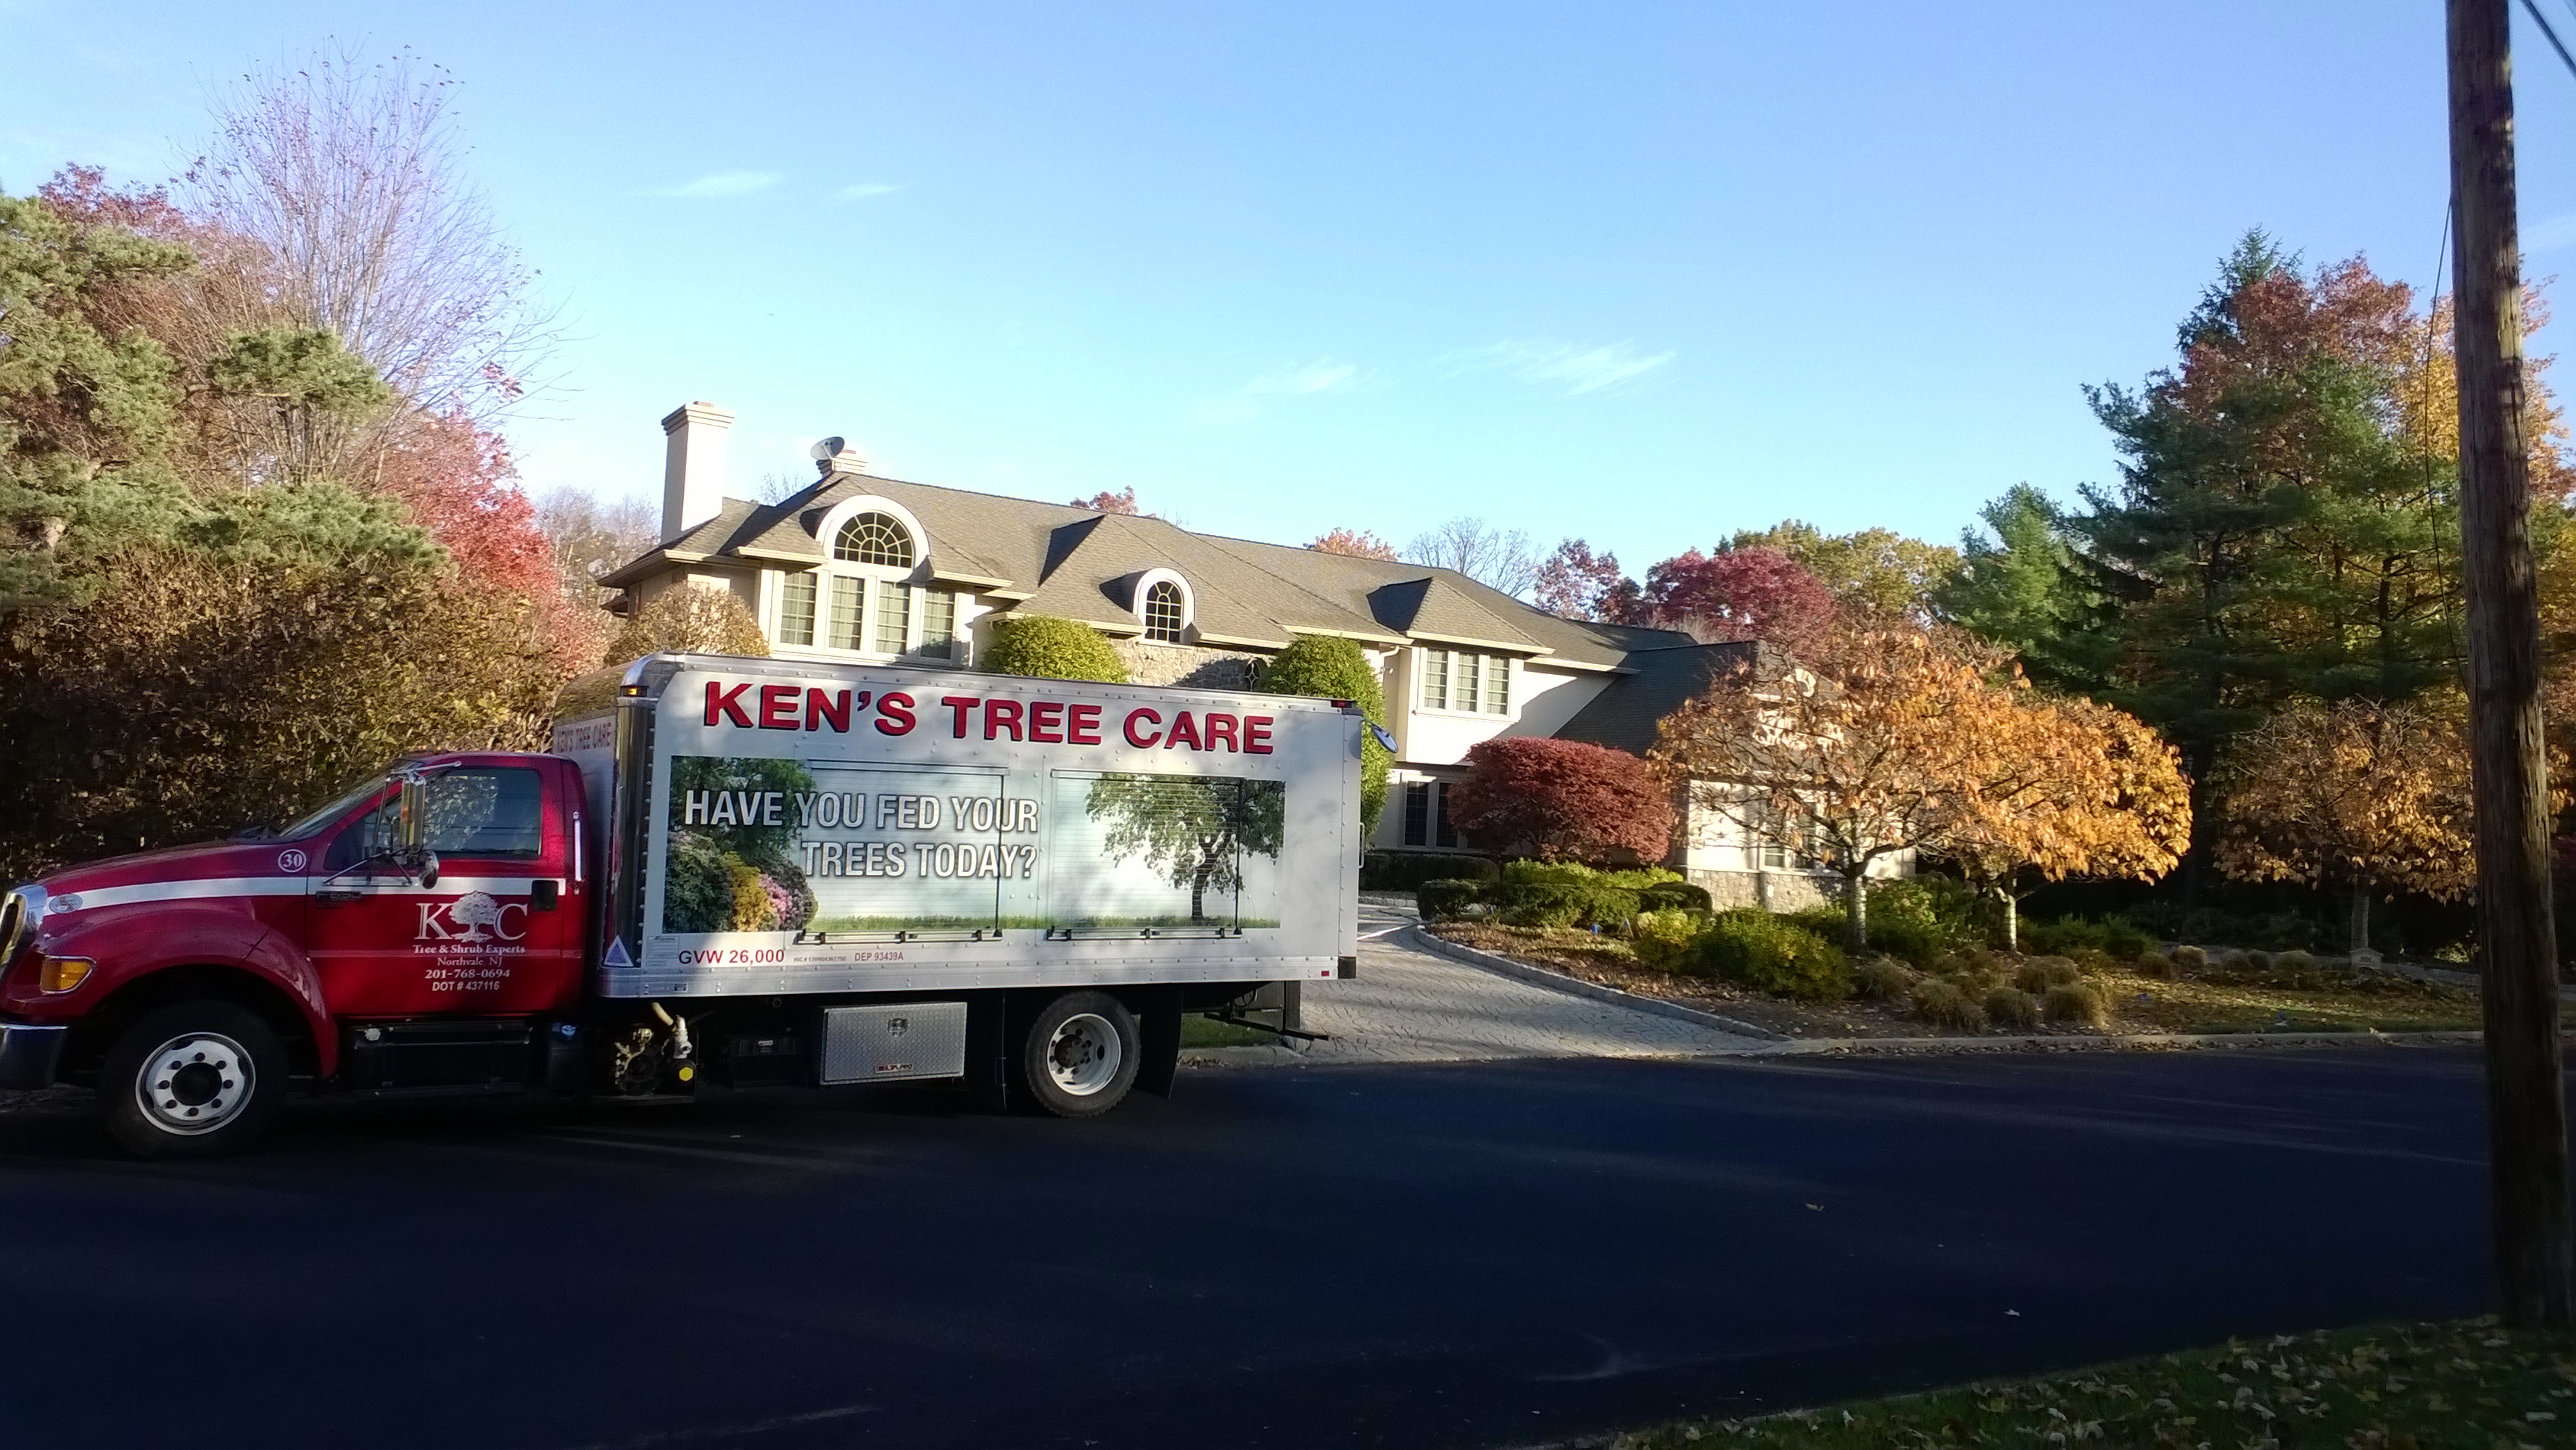 Kens Tree Care on the job